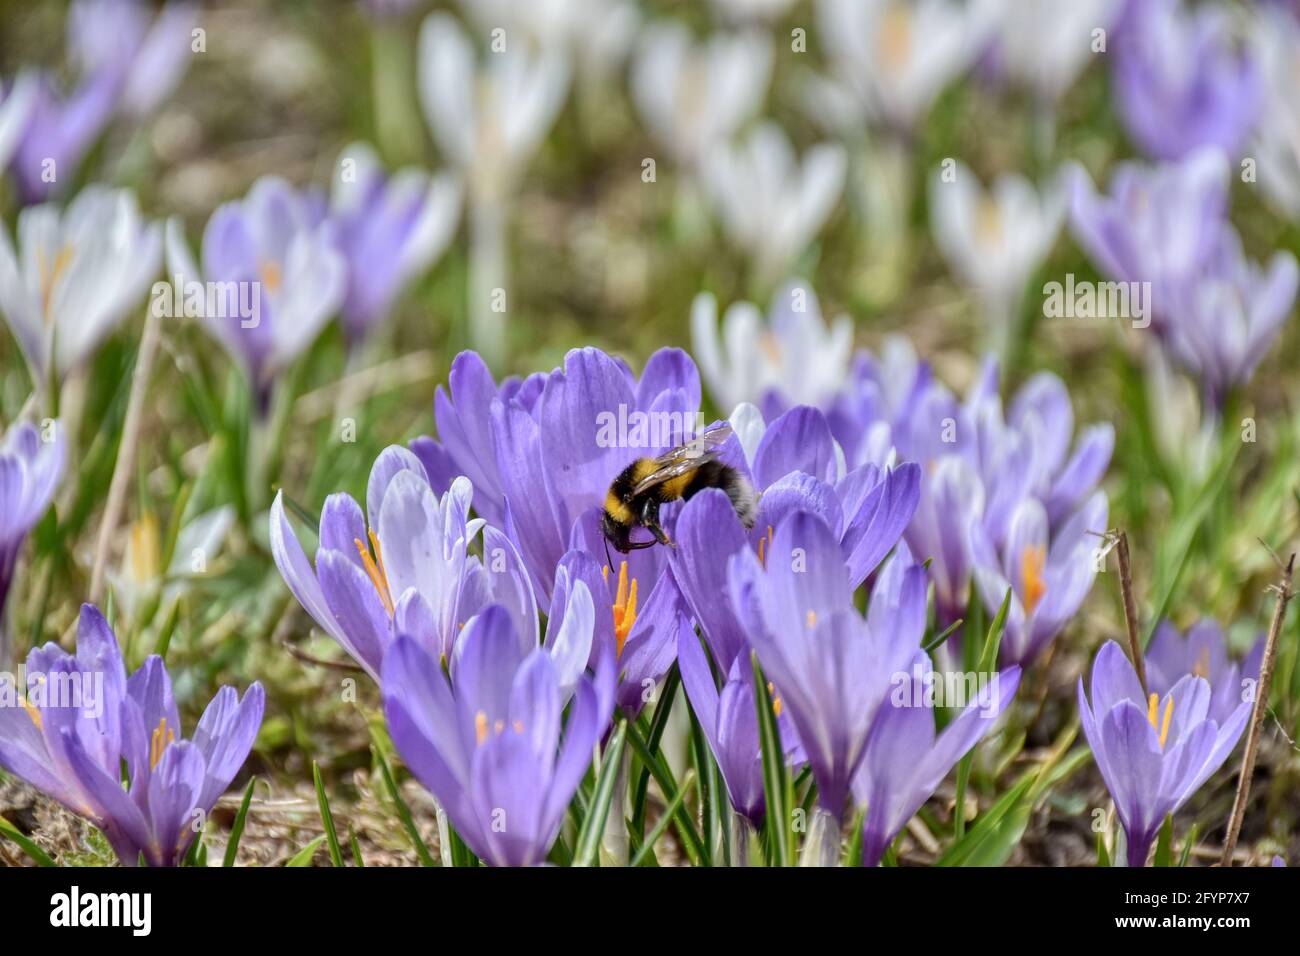 Hummel, Echte Biene, Gattung, Bombus, Biene, Honigbiene, fliegen, Frühling, bestäuben, Blüte, Blütenkelch, Blume, Krokus, Flügel, Wiese, Blumenwiese, Stock Photo